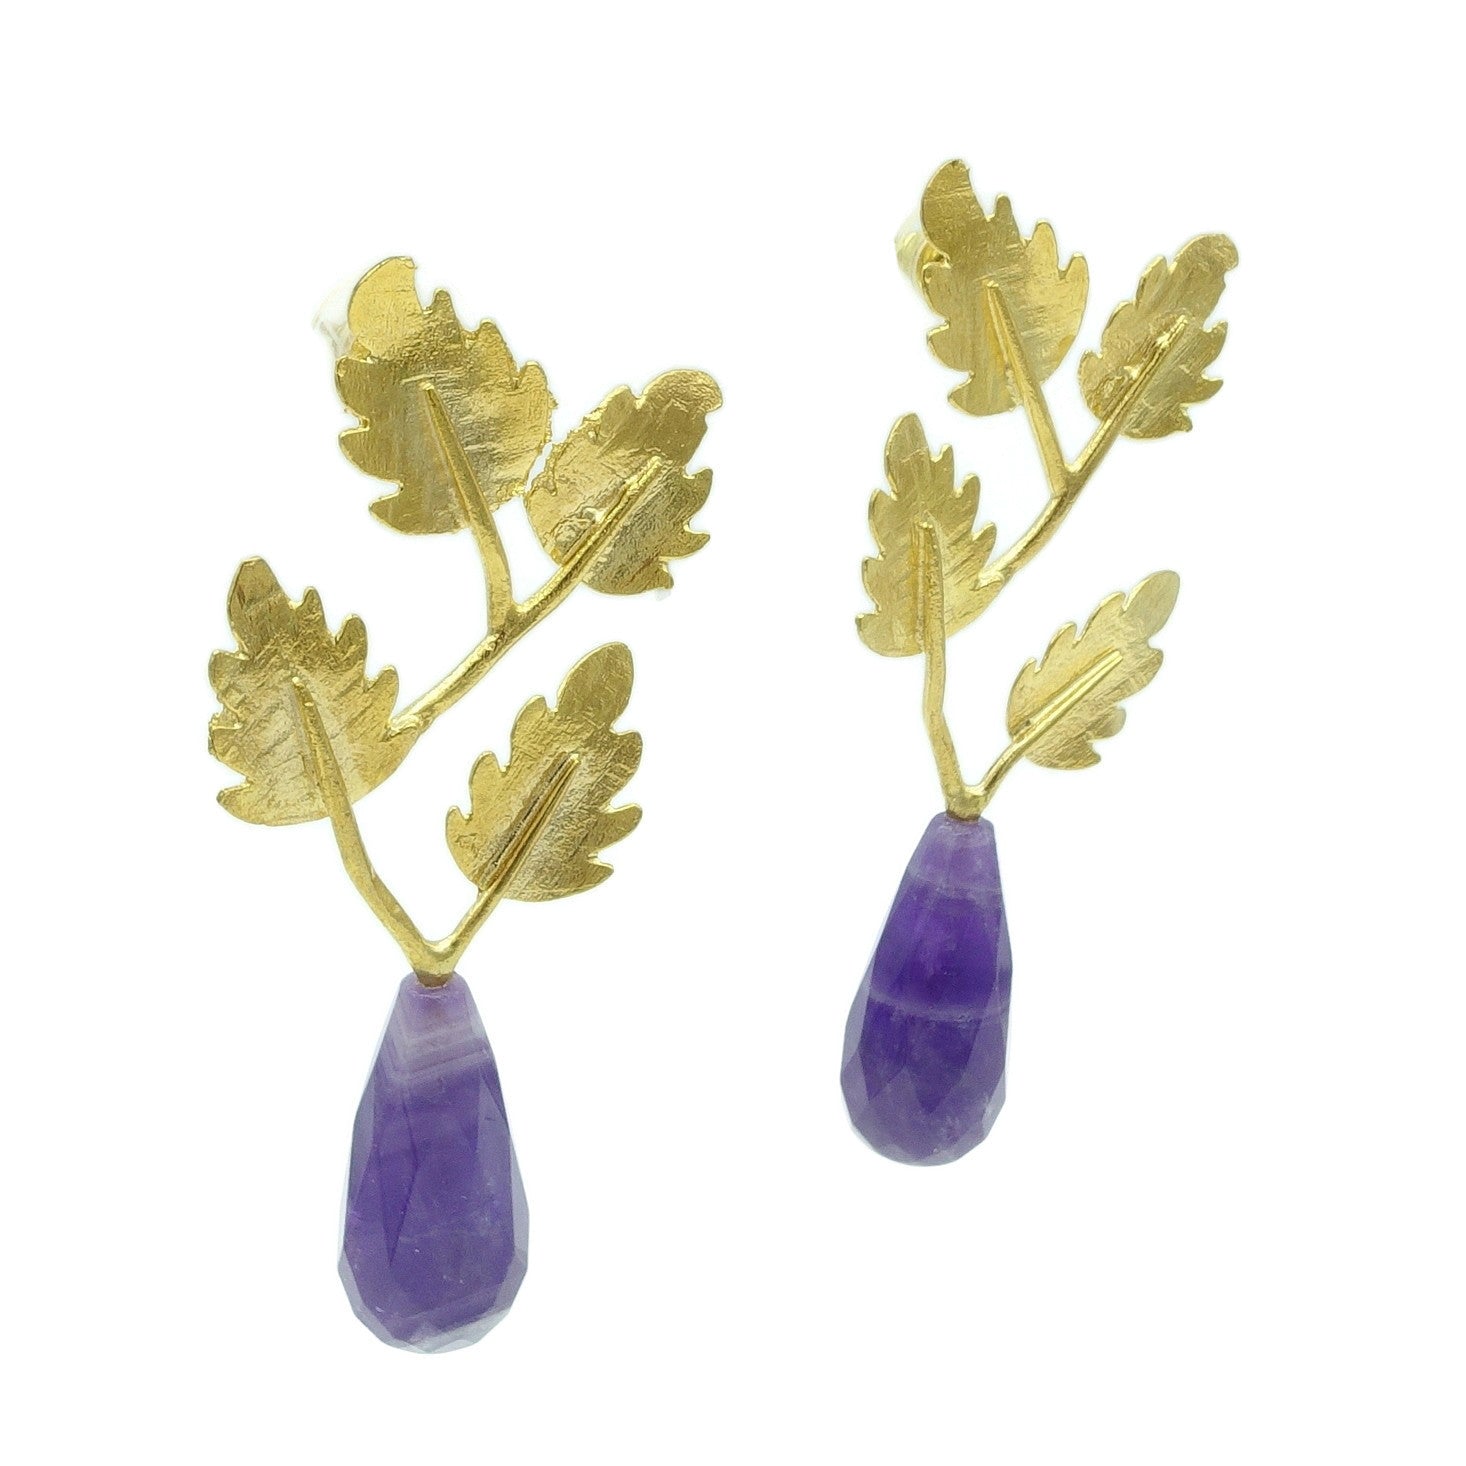 Aylas Agate semi precious gemstone earrings - 21ct Gold plated Handmade